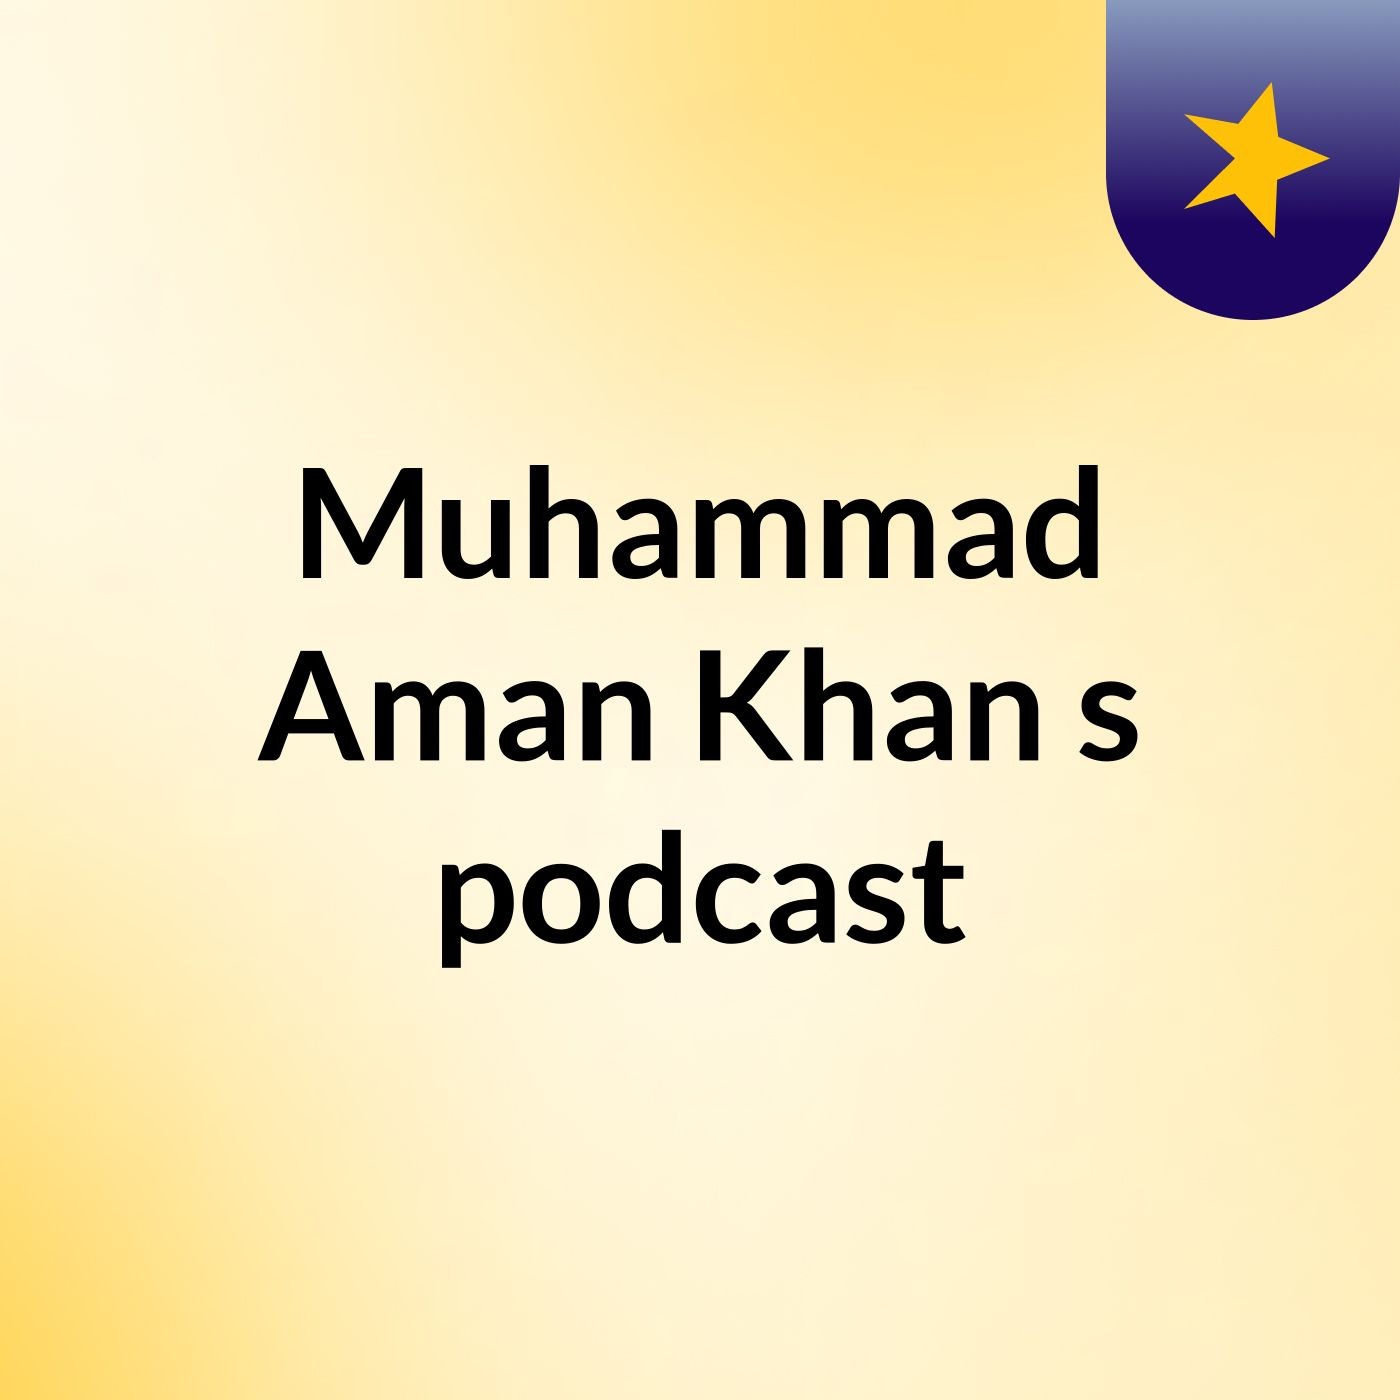 Muhammad Aman Khan's podcast